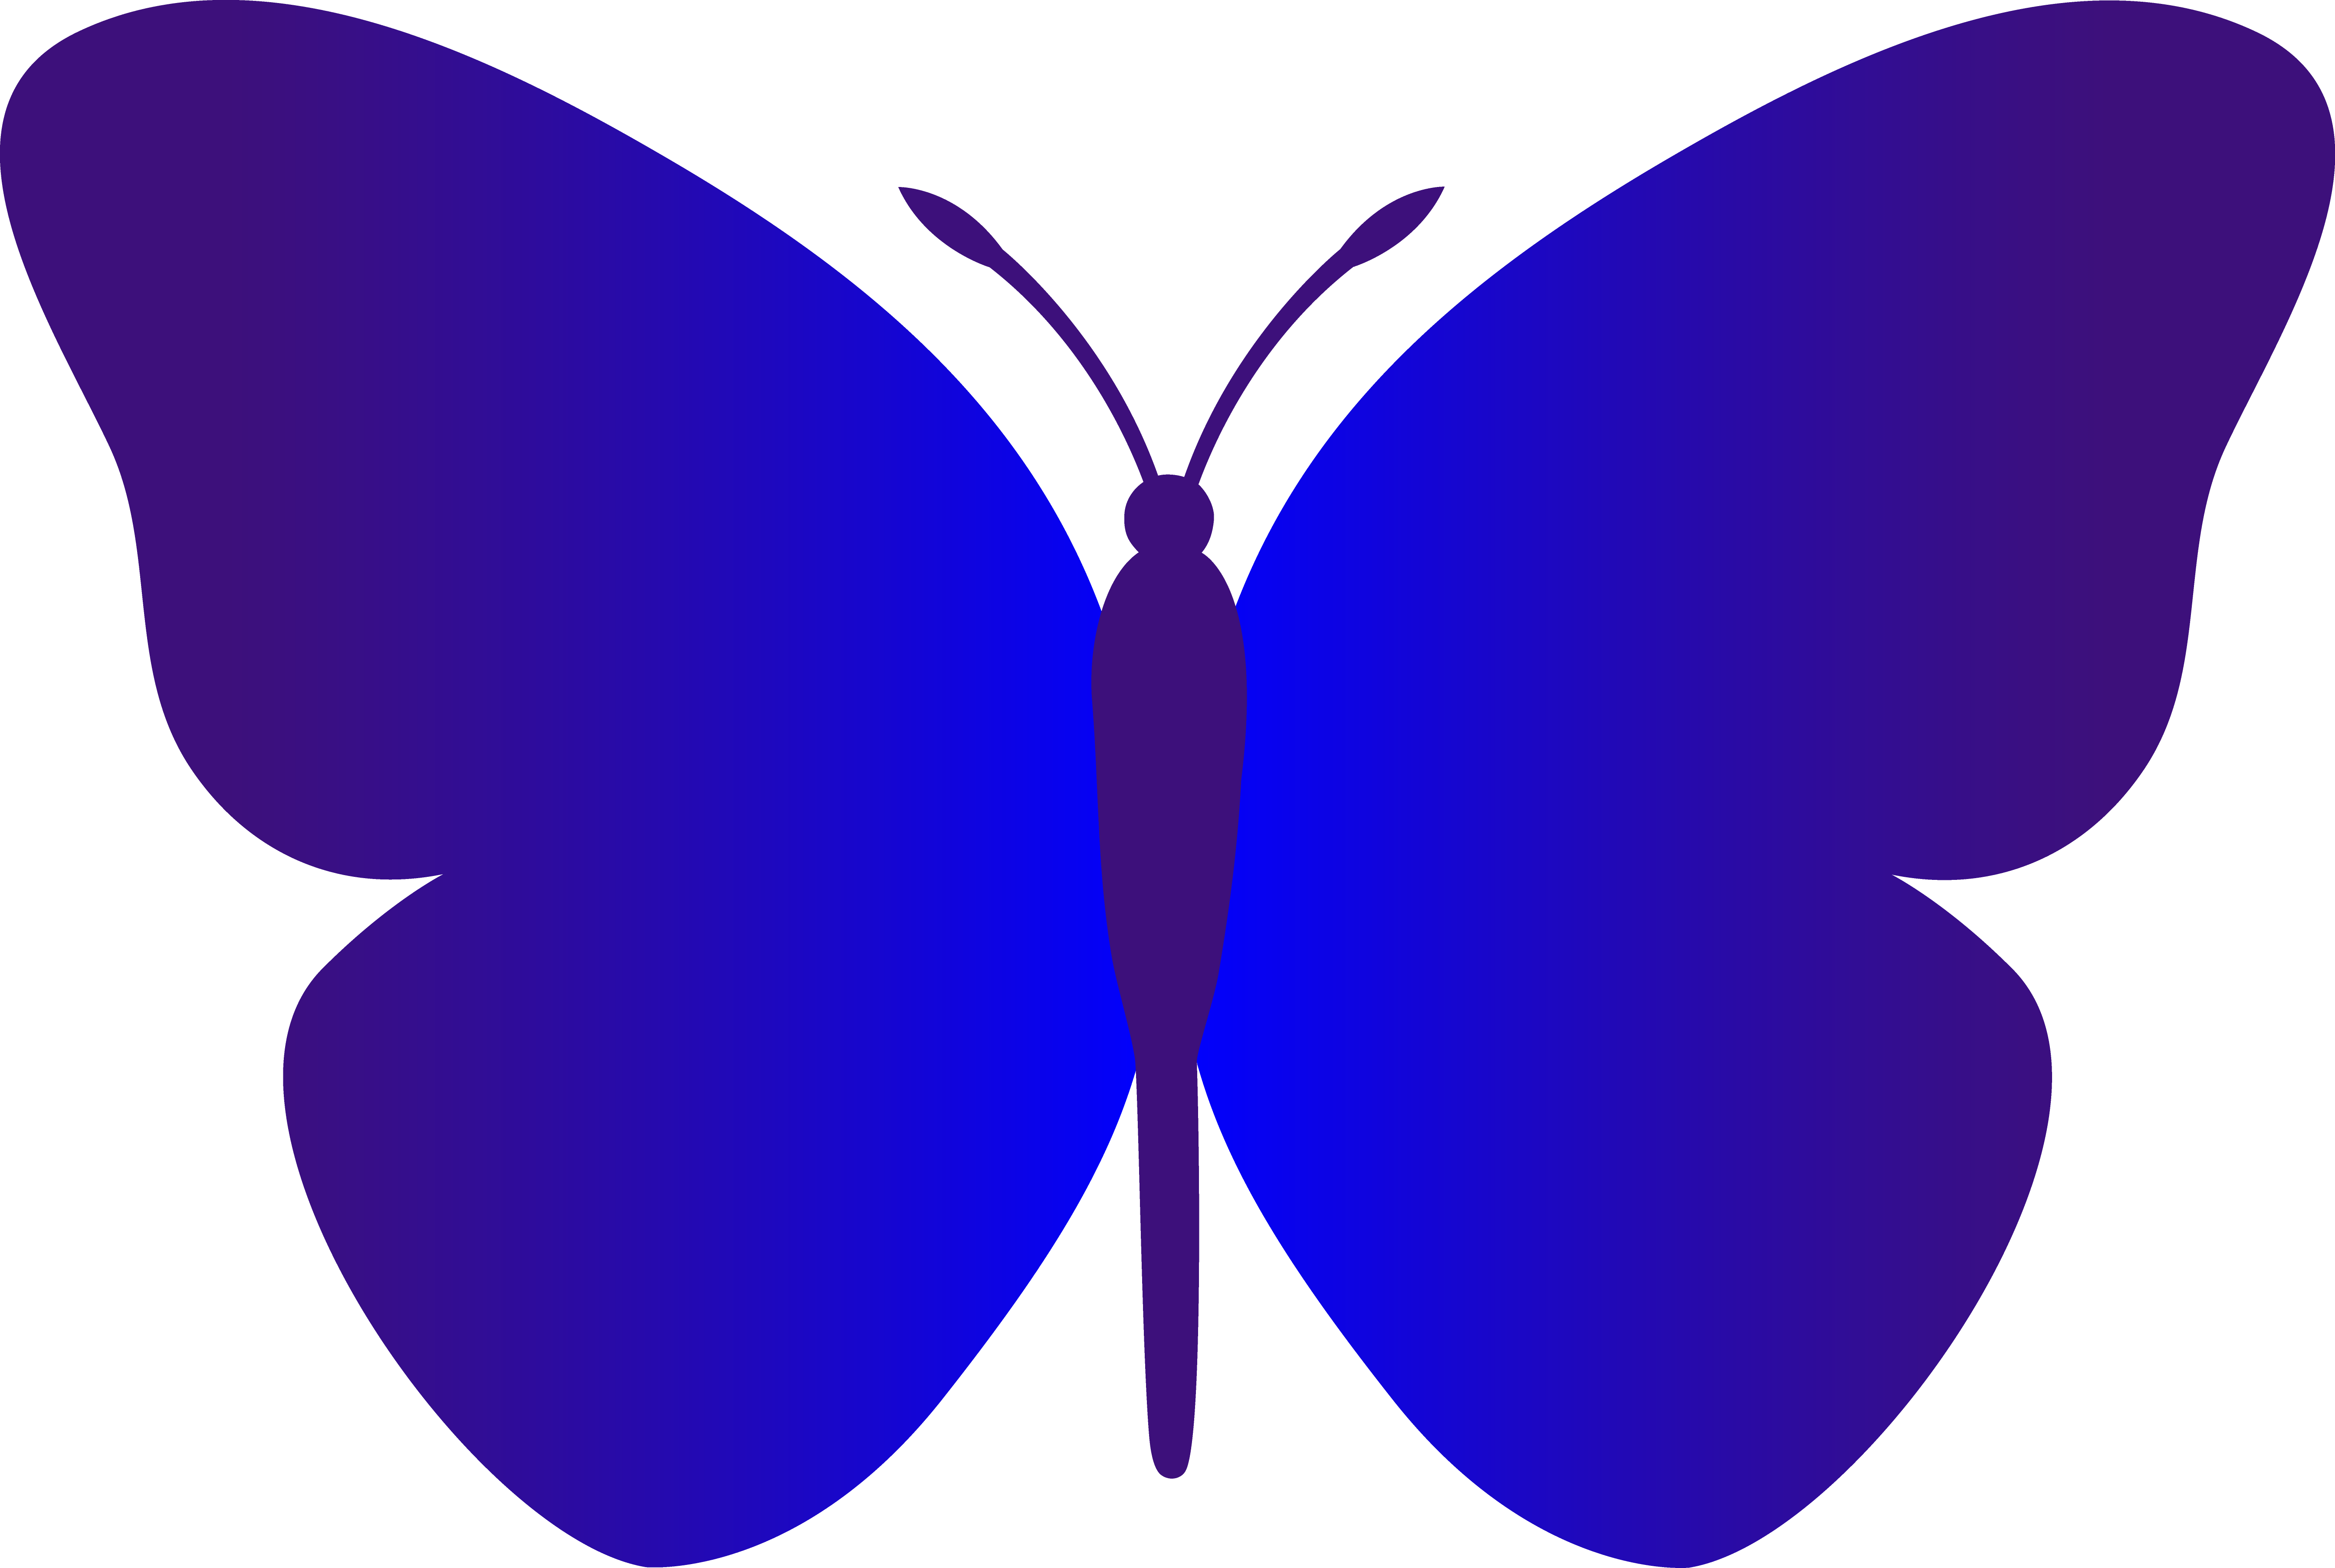 Simple Blue Butterfly - Free Clip Art